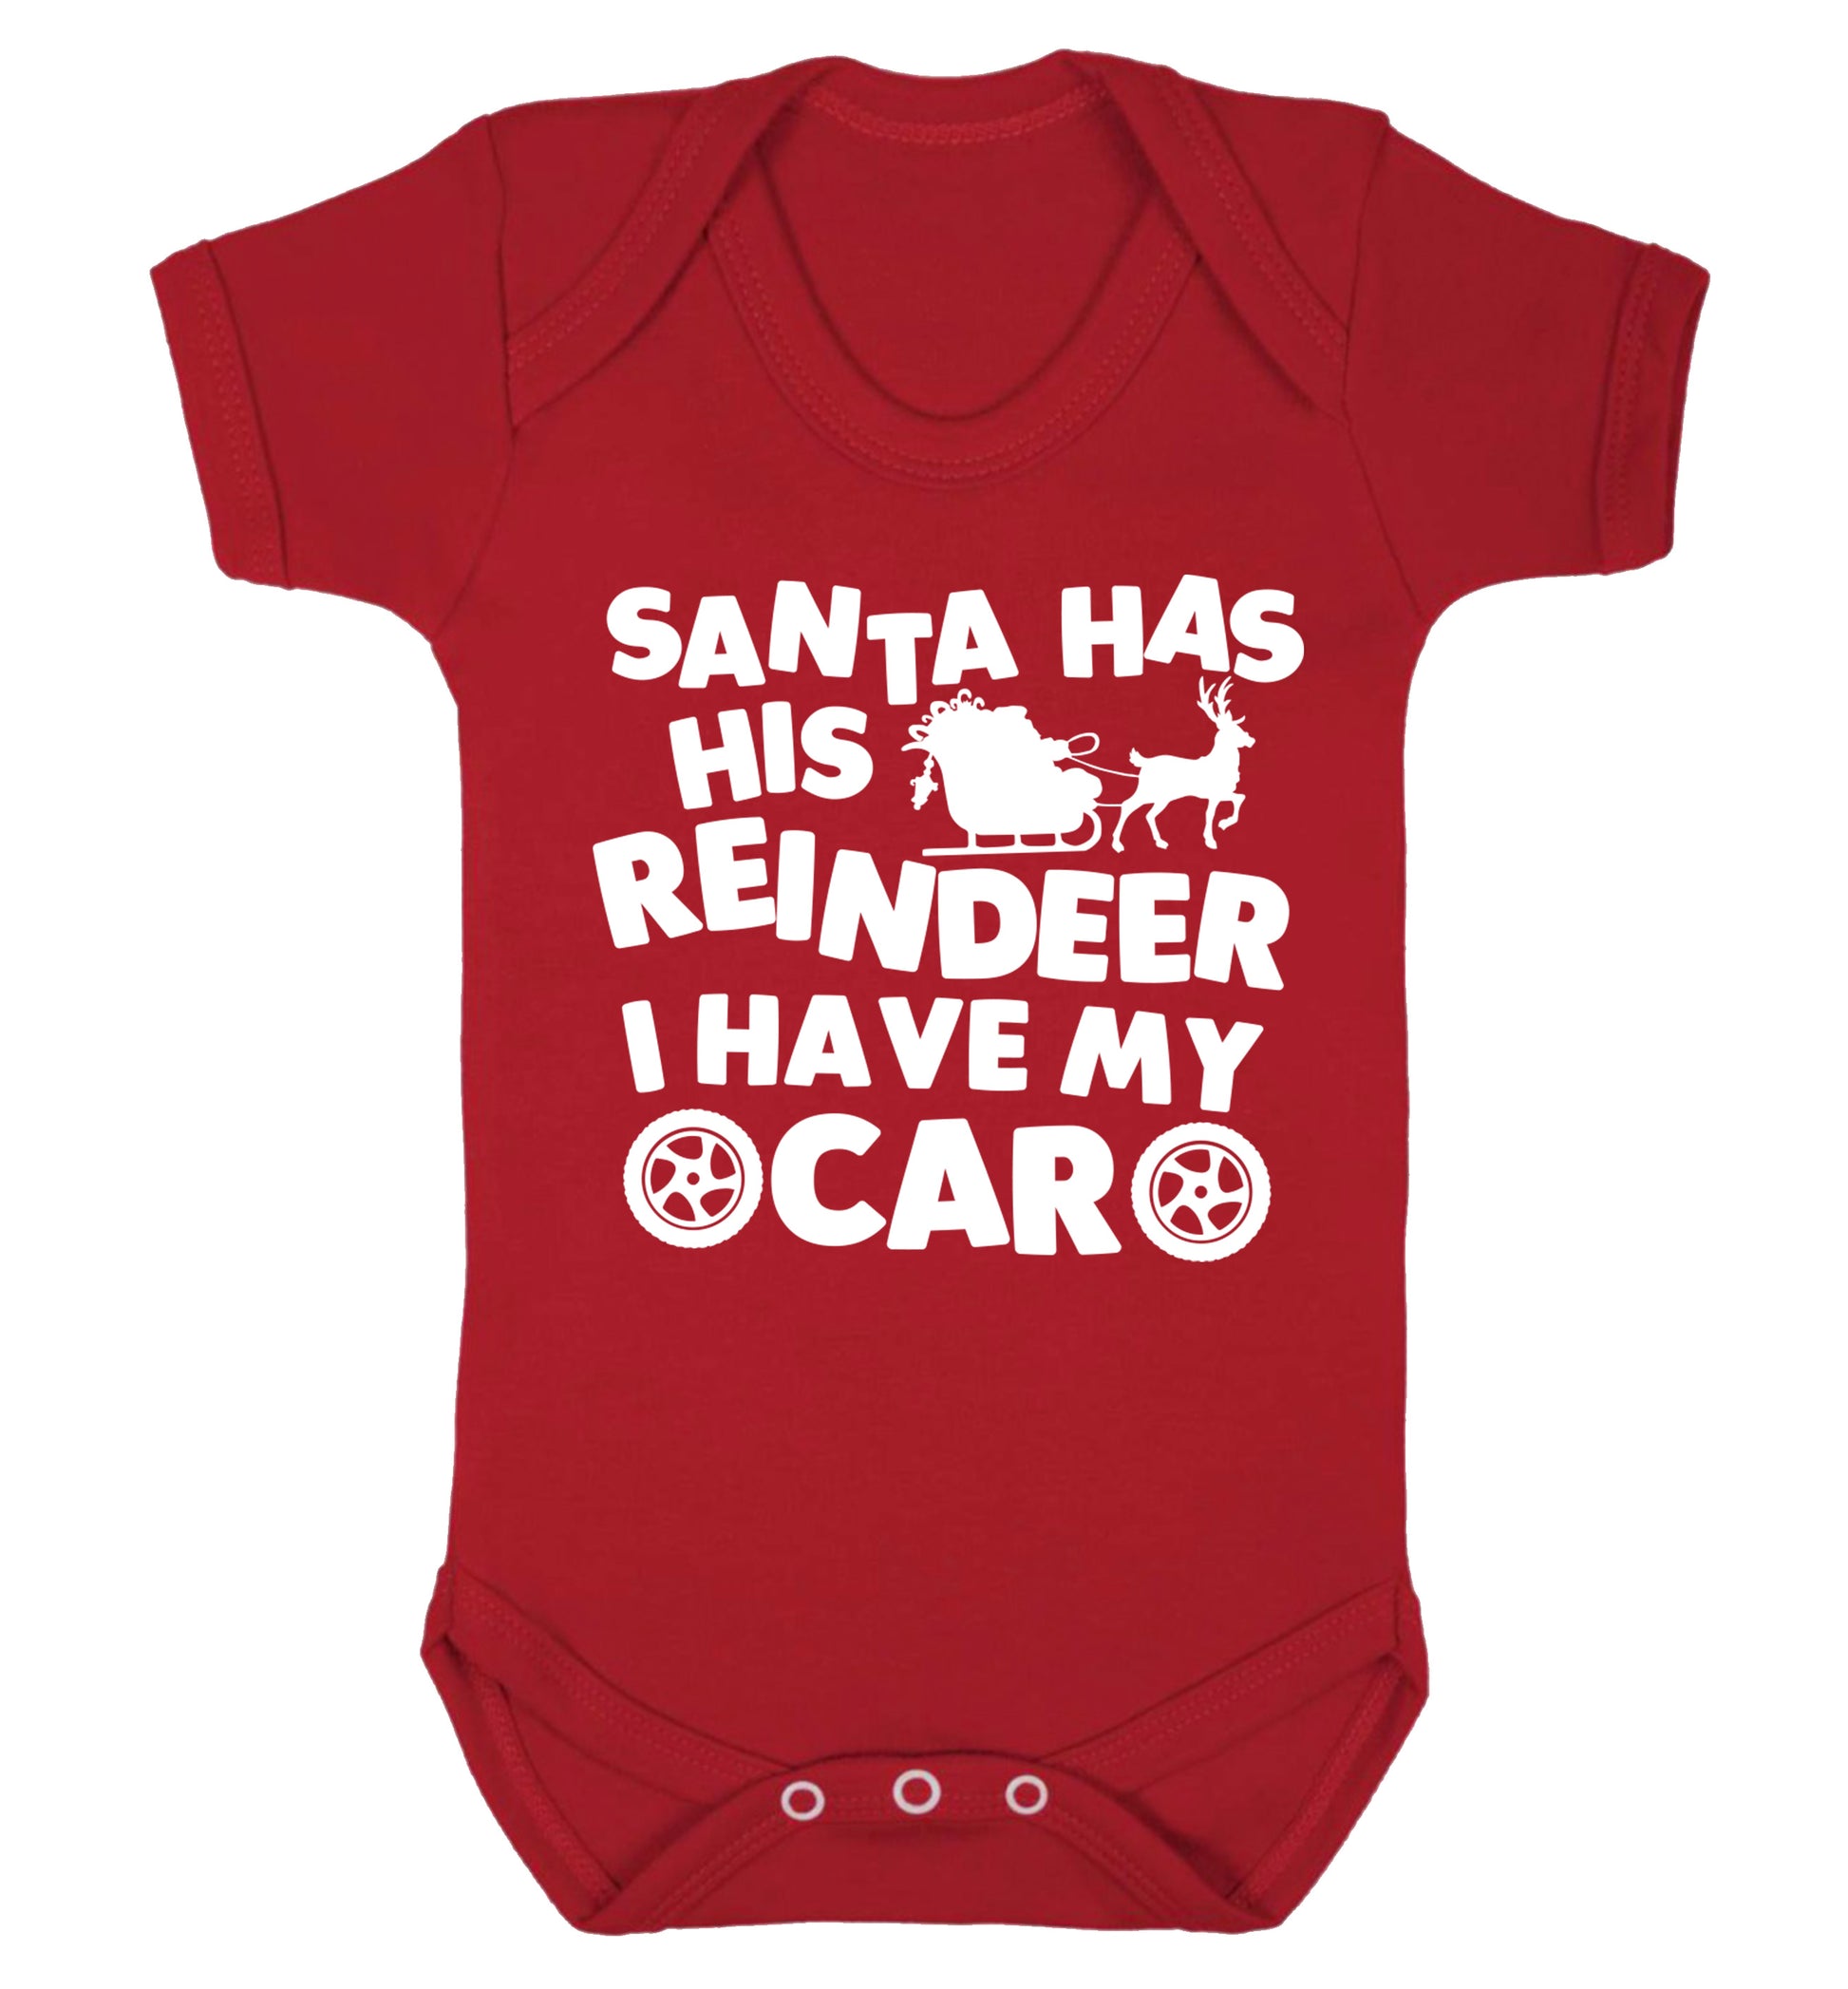 Santa has his reindeer I have my car Baby Vest red 18-24 months